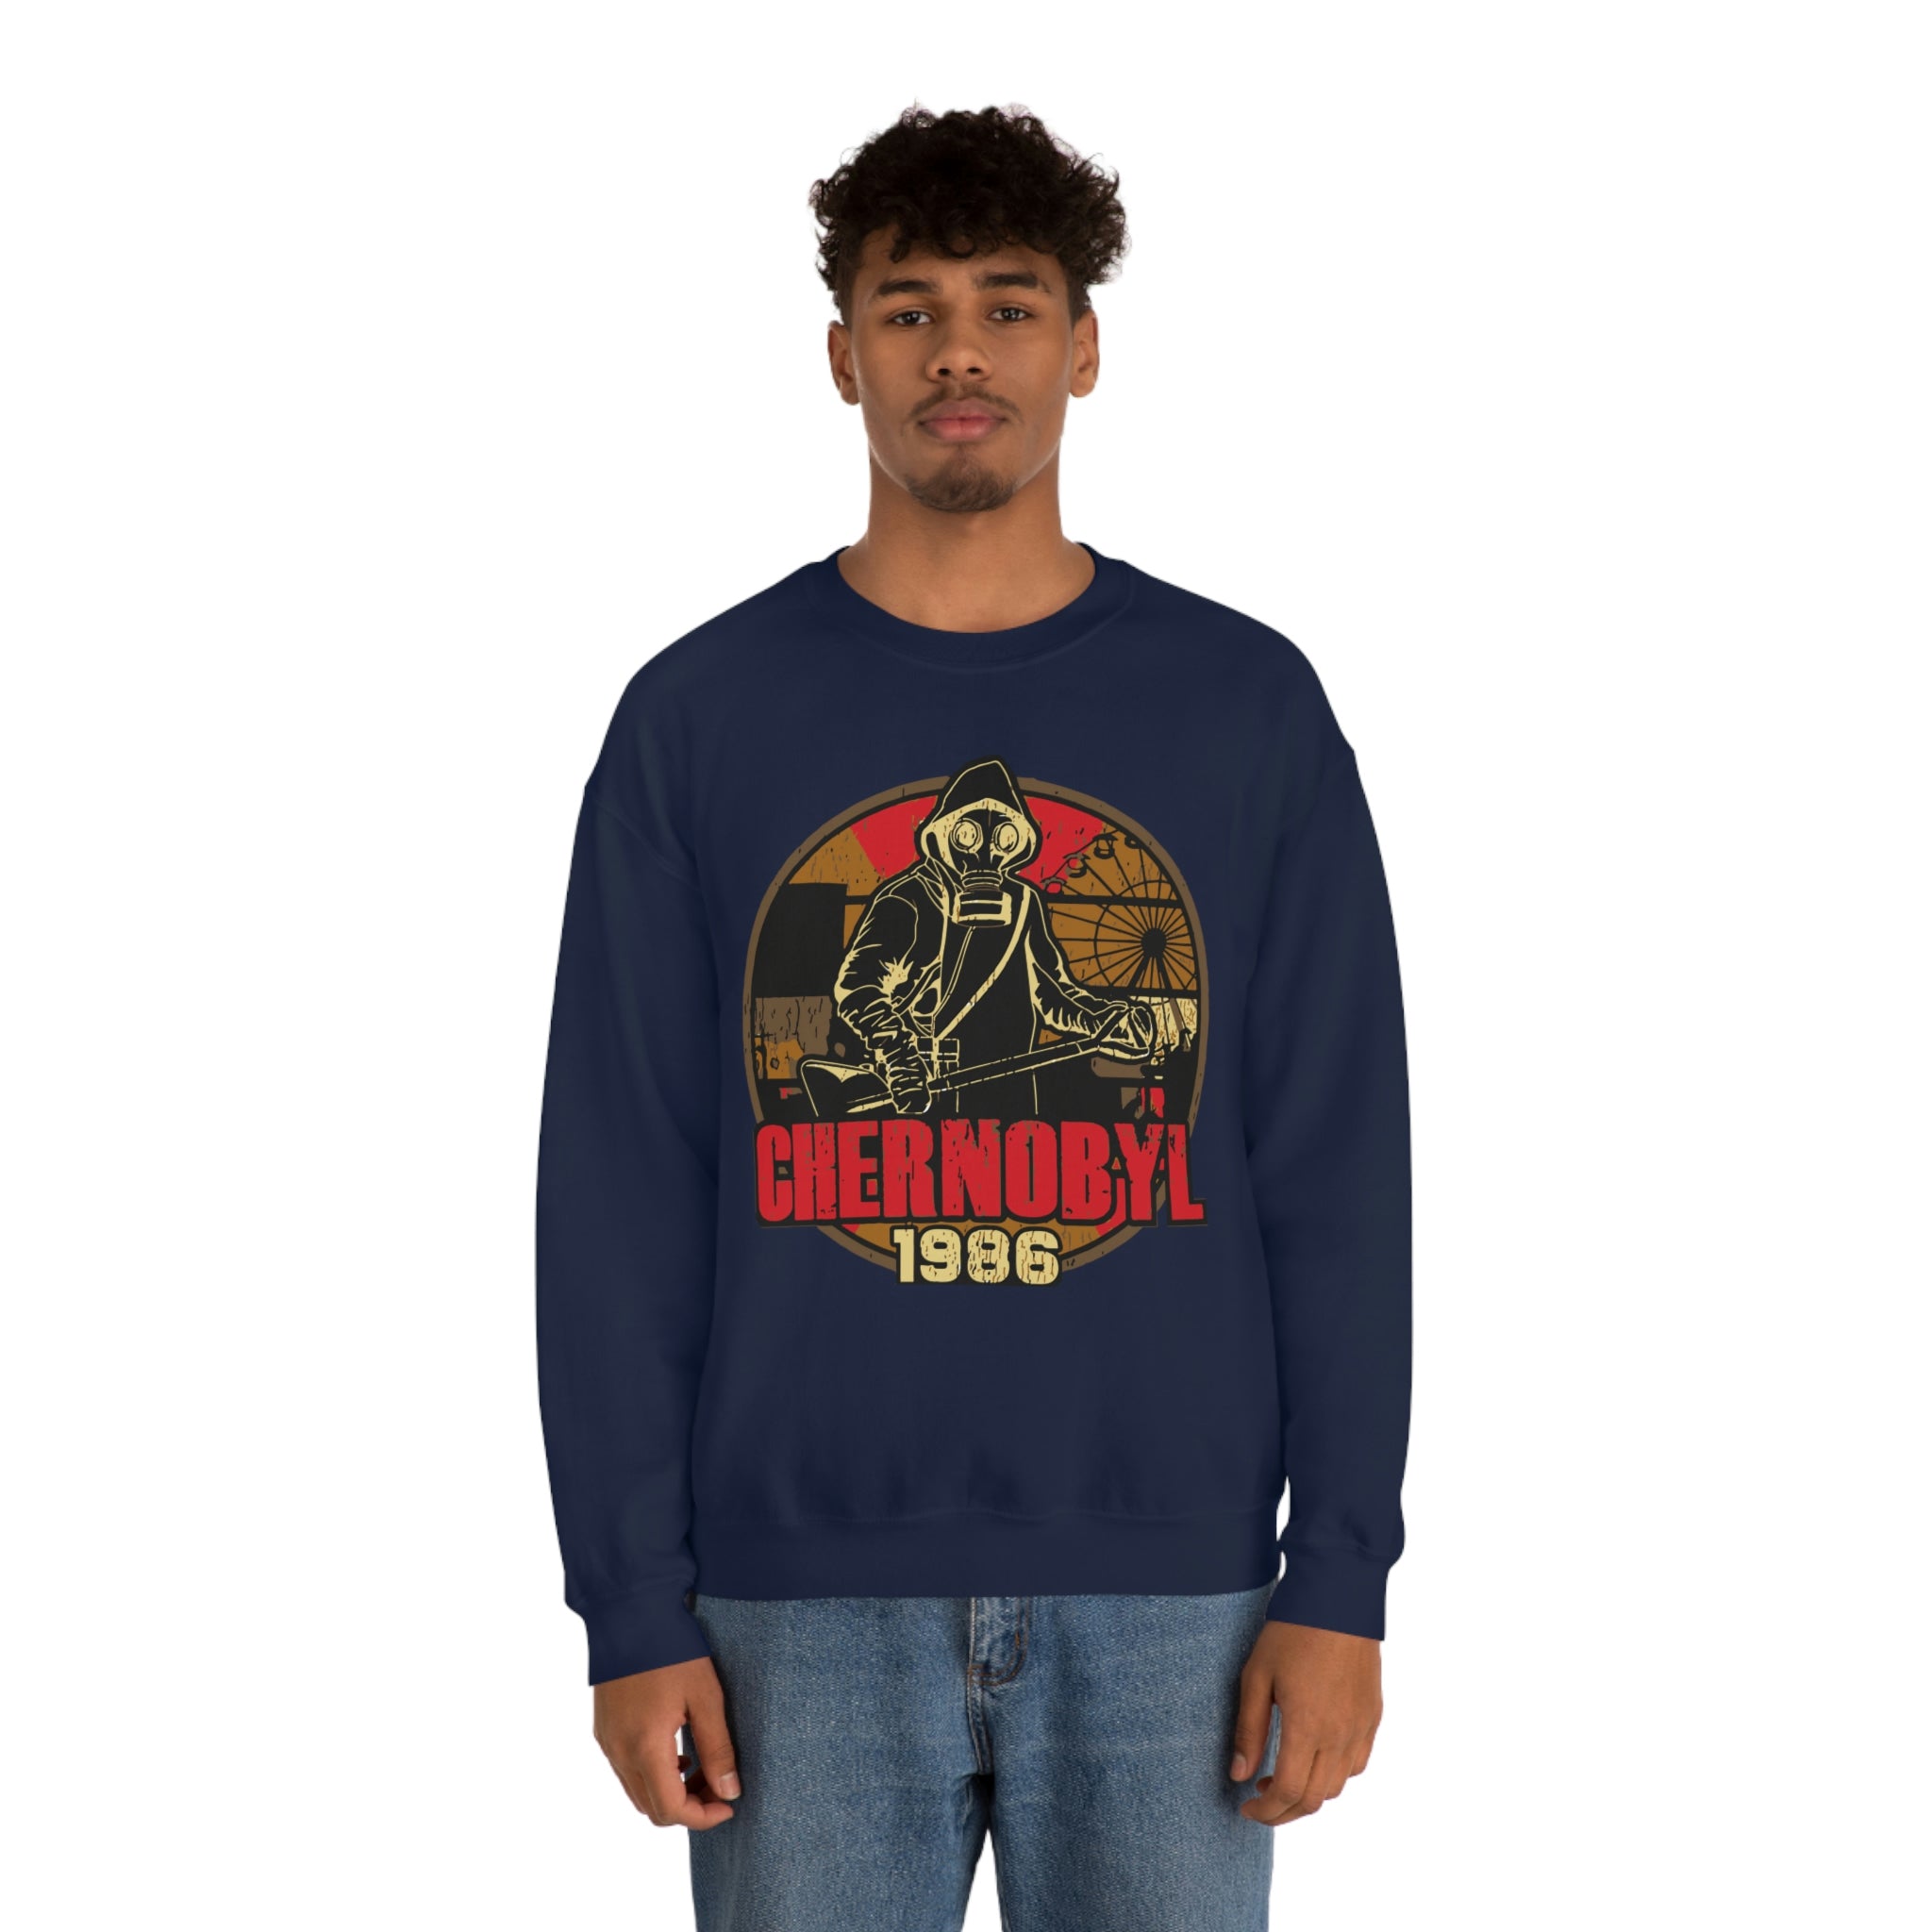 Chernobyl 1986 - Crewneck Sweatshirt